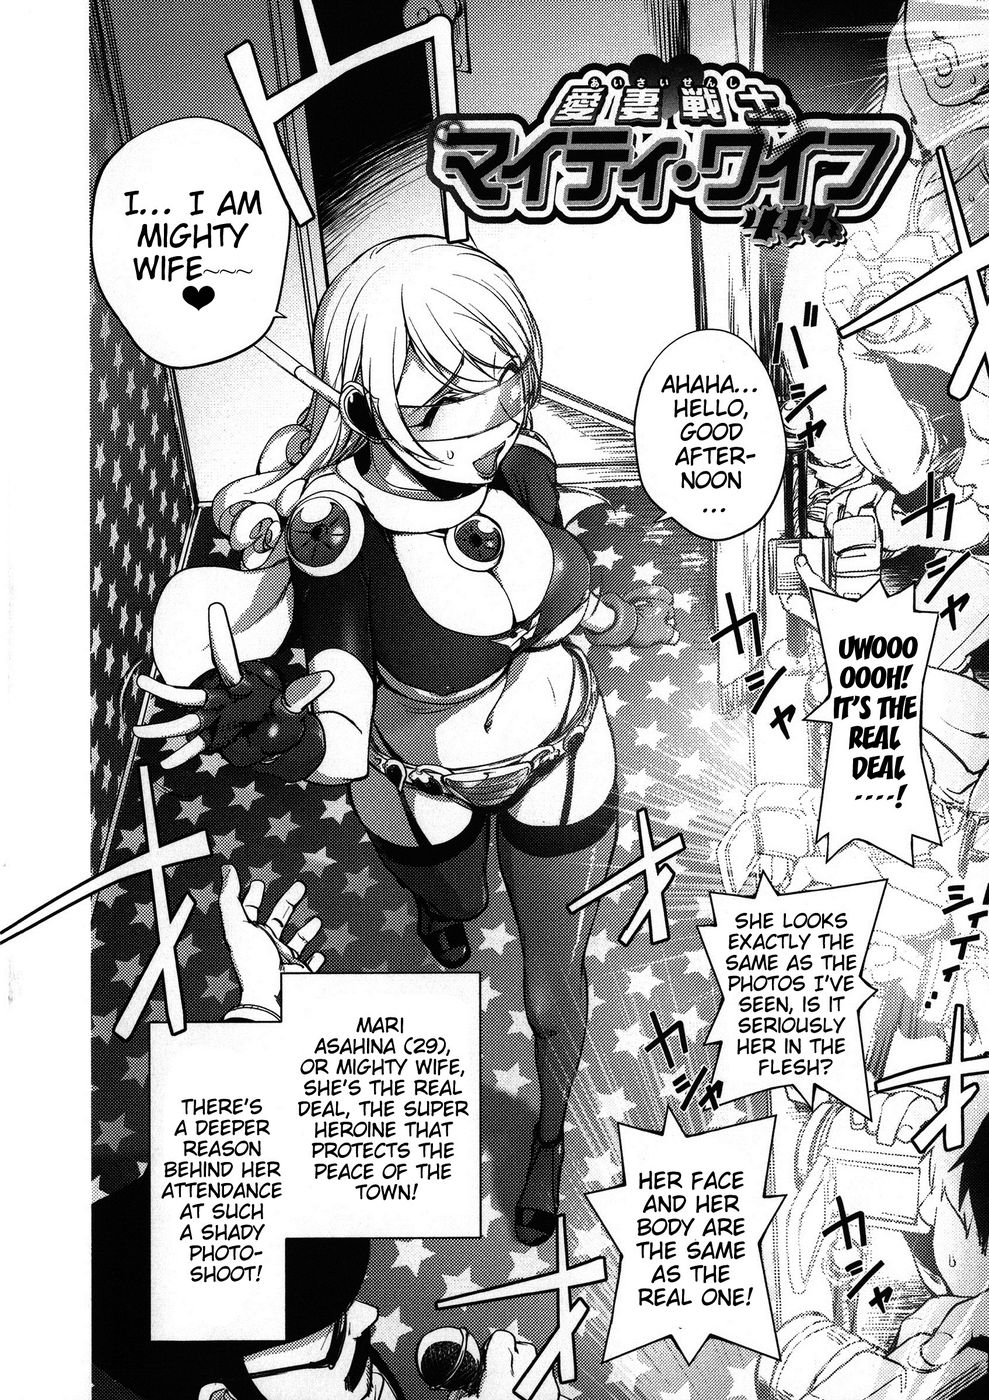 Hentai Manga Comic-Beloved Warrior Wife-Chapter 4 - mighty wife 4-2